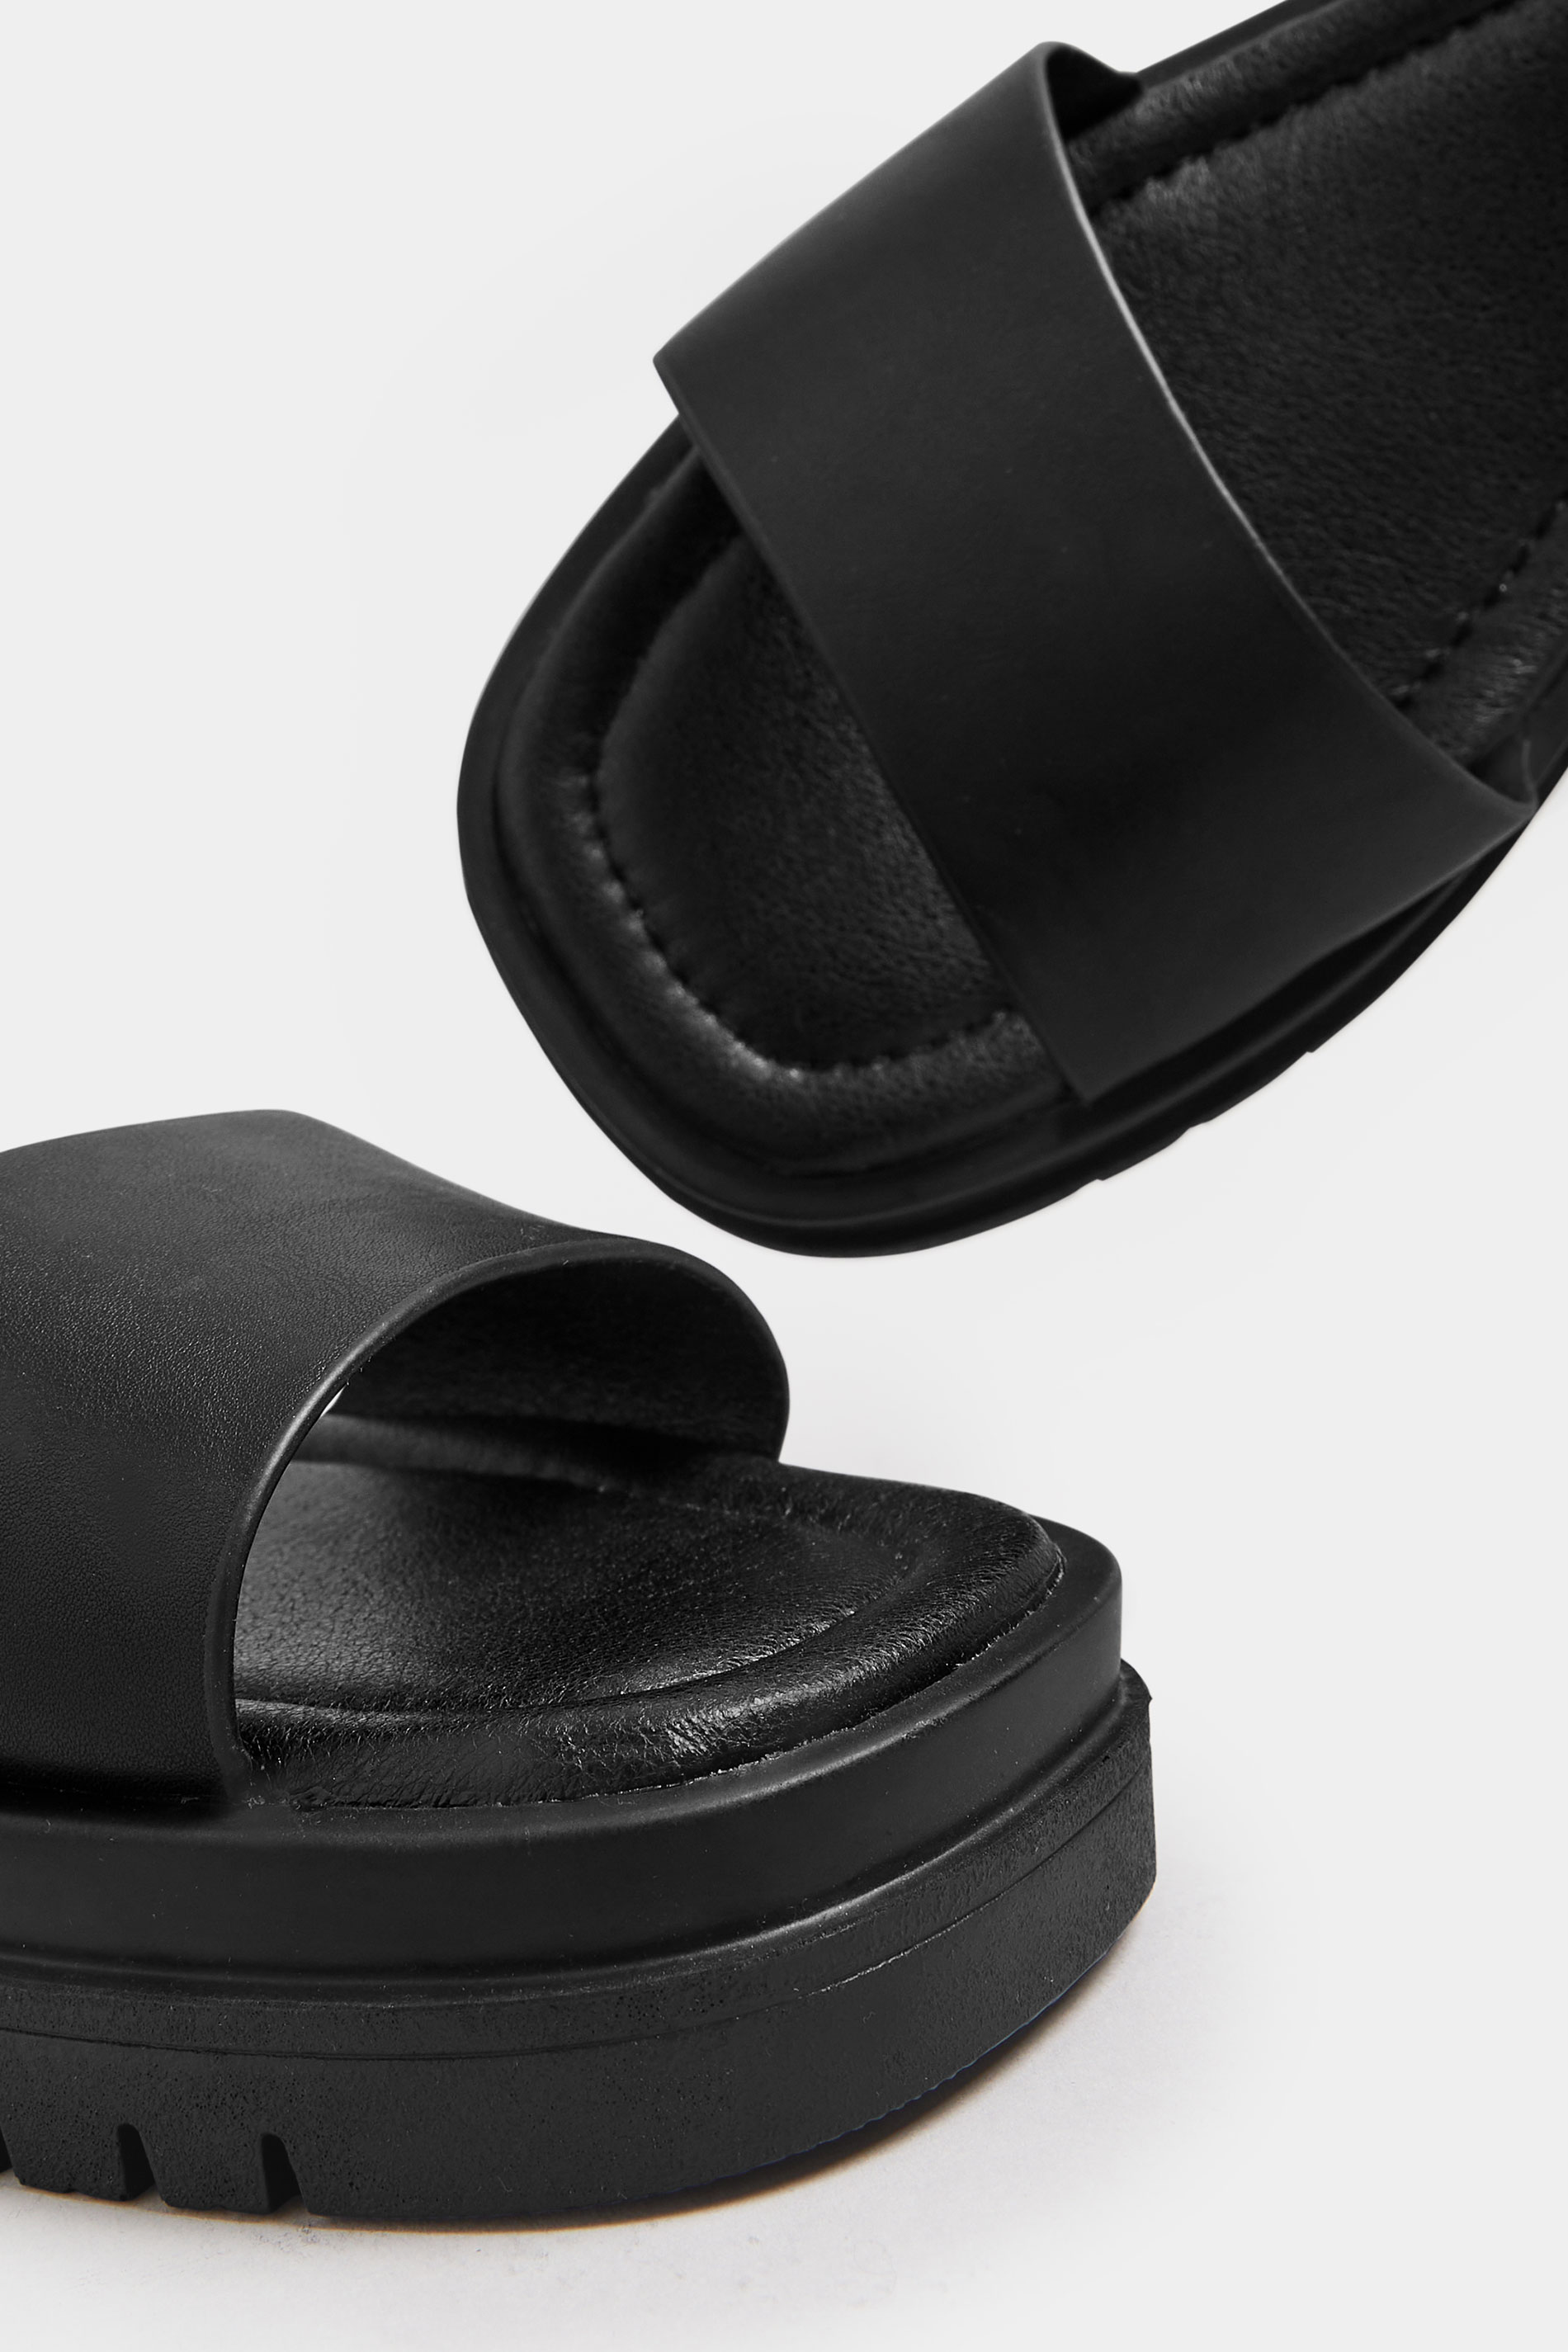 Black Flip Flops In Extra Wide EEE Fit